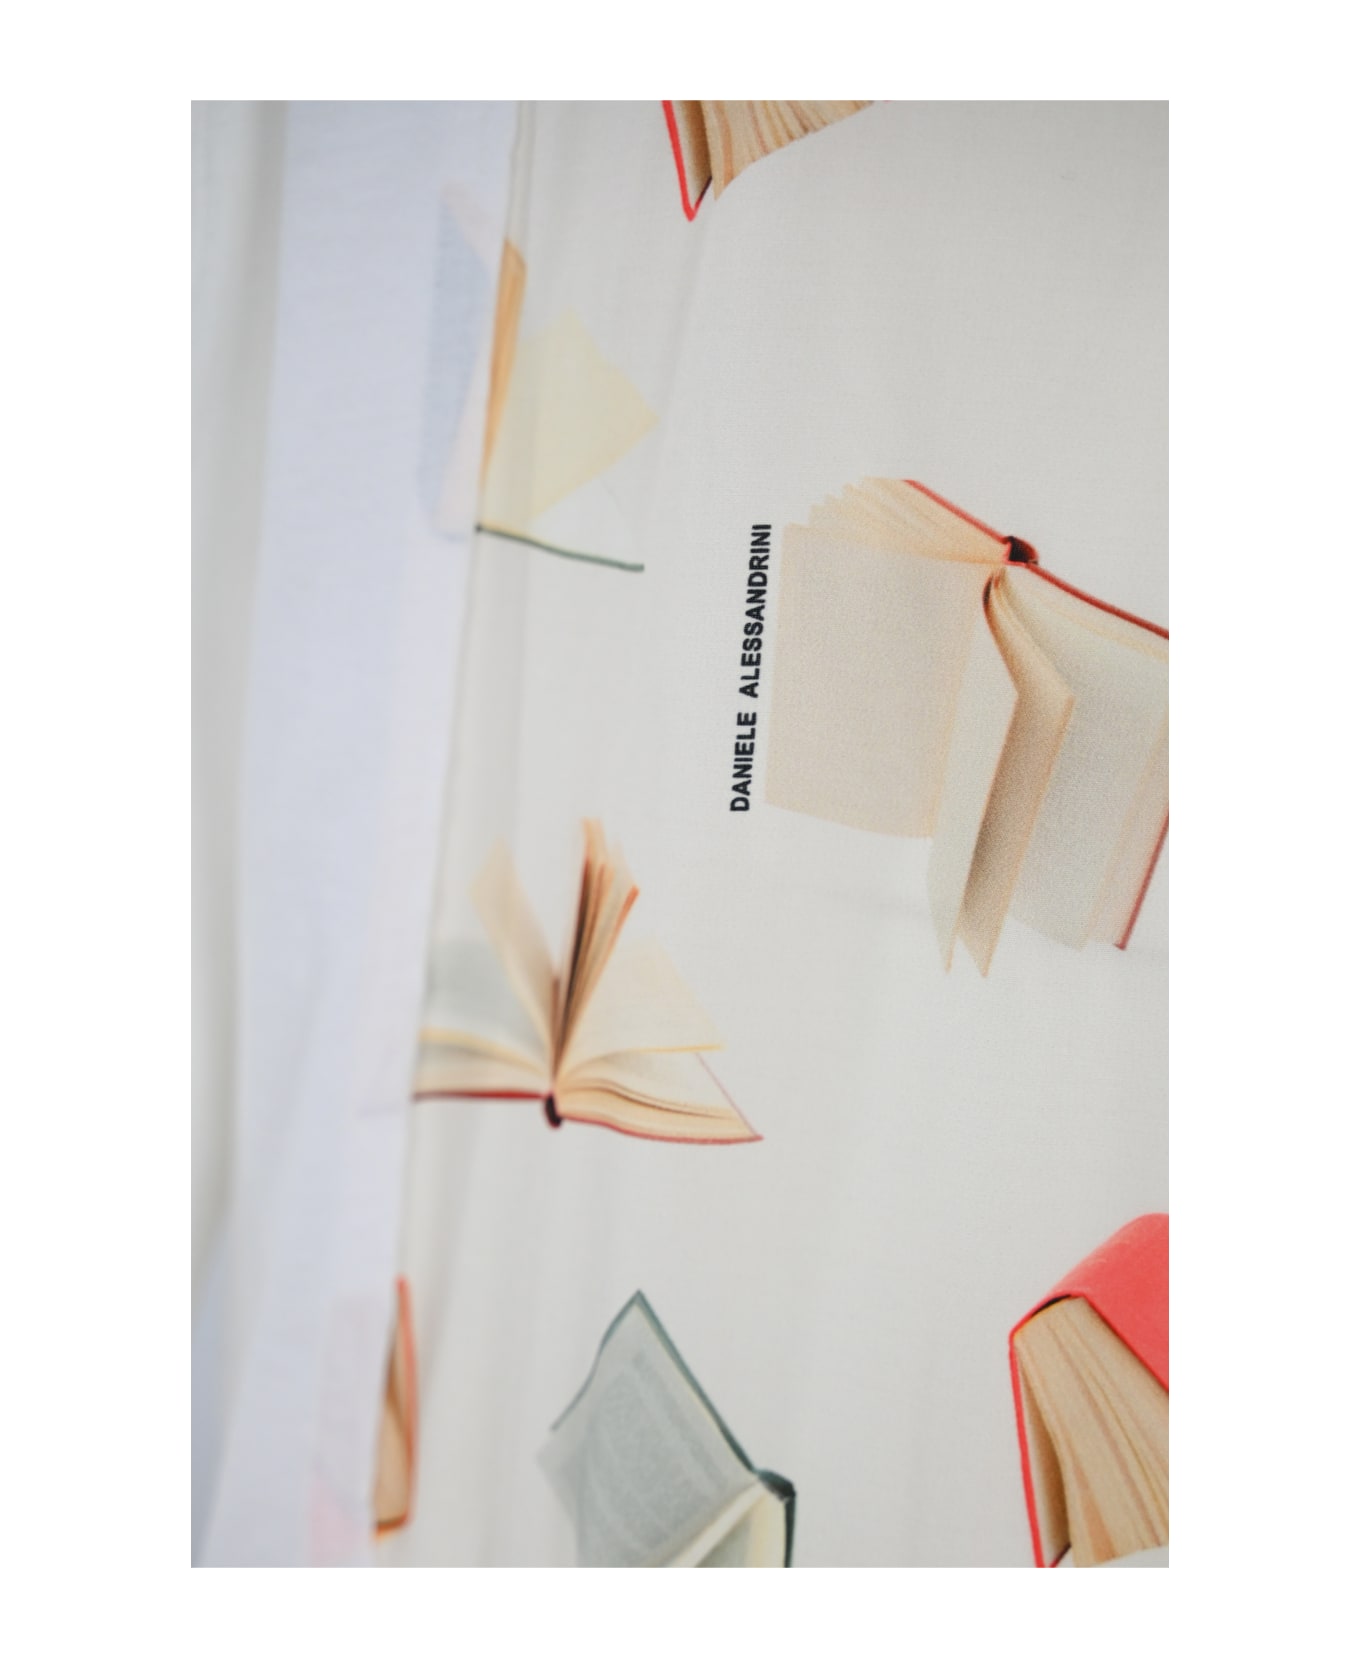 Daniele Alessandrini T-shirt With Book Print - Bianco